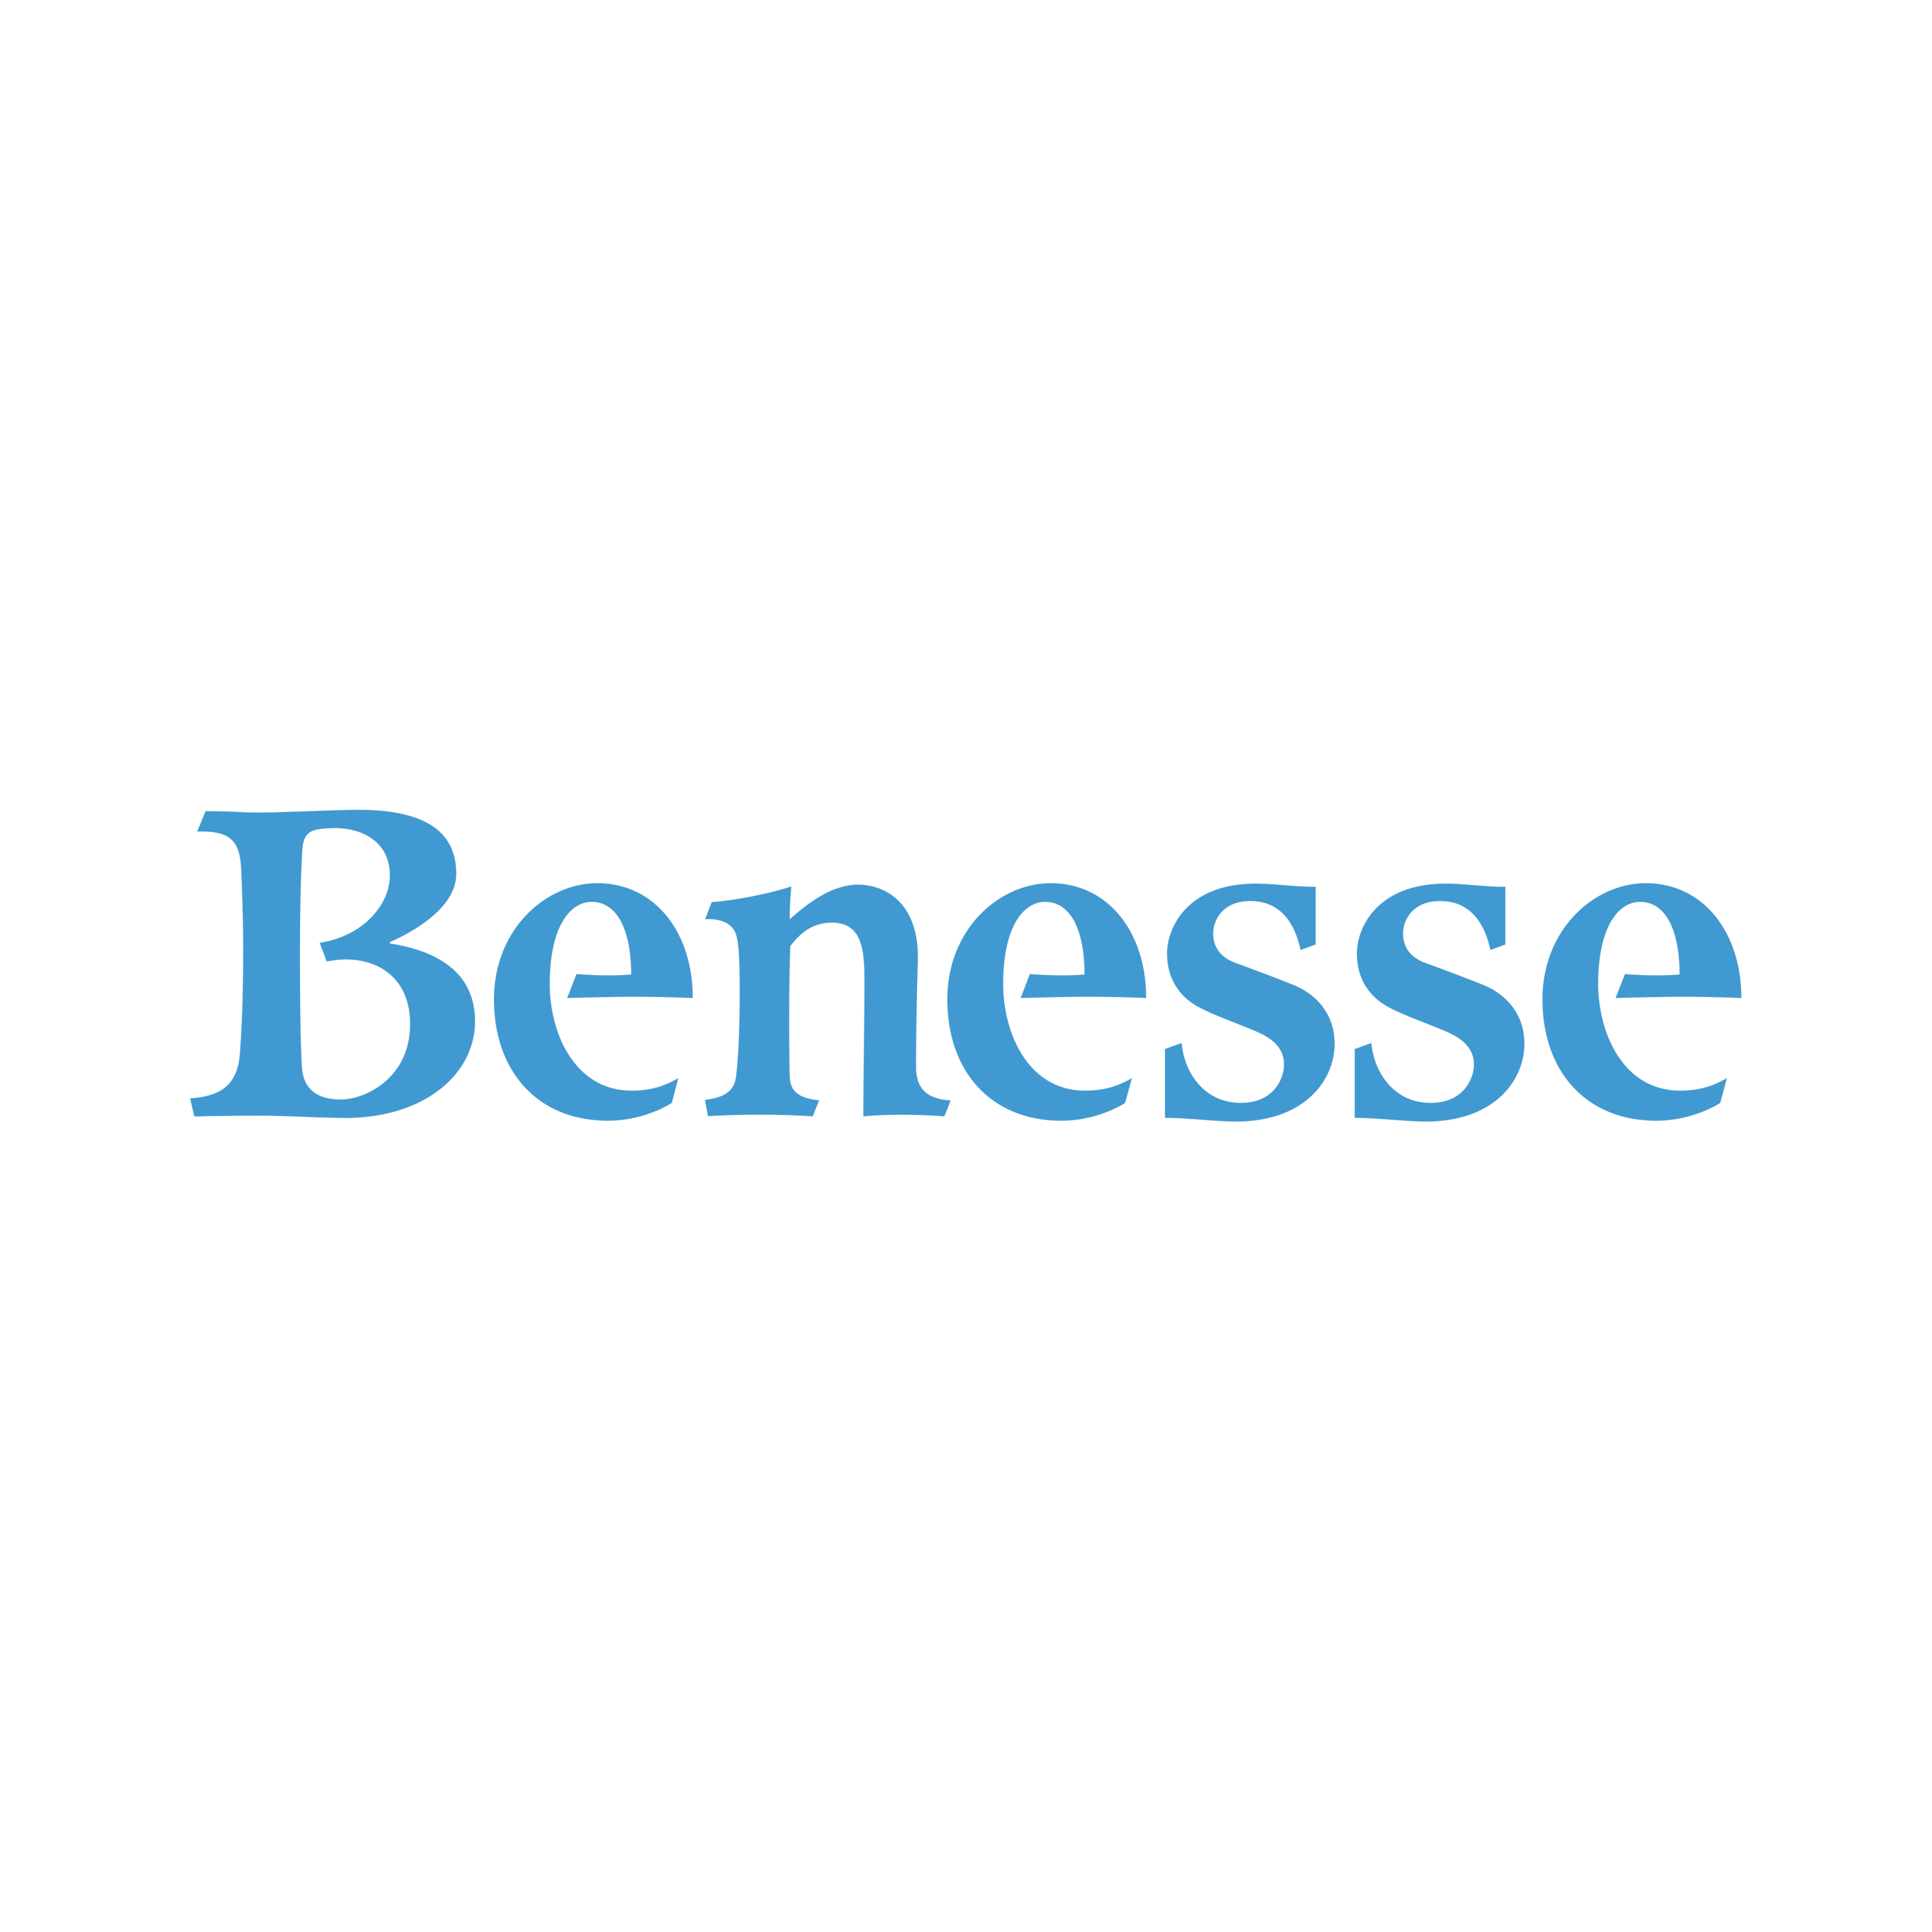 Benesse Logo Transparent Picture